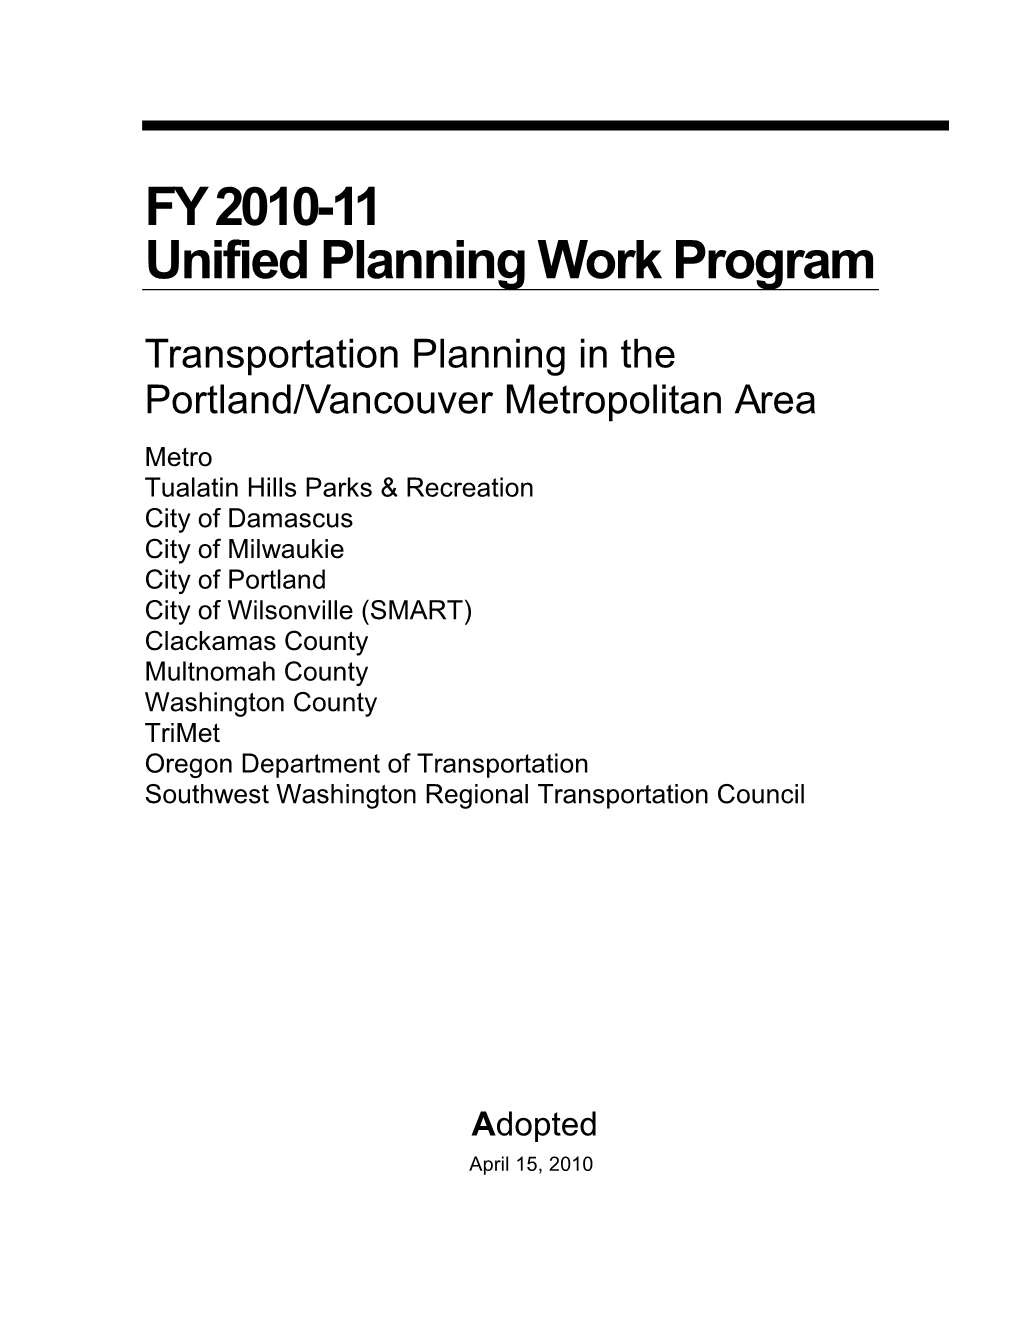 FY 2010-11 Unified Planning Work Program